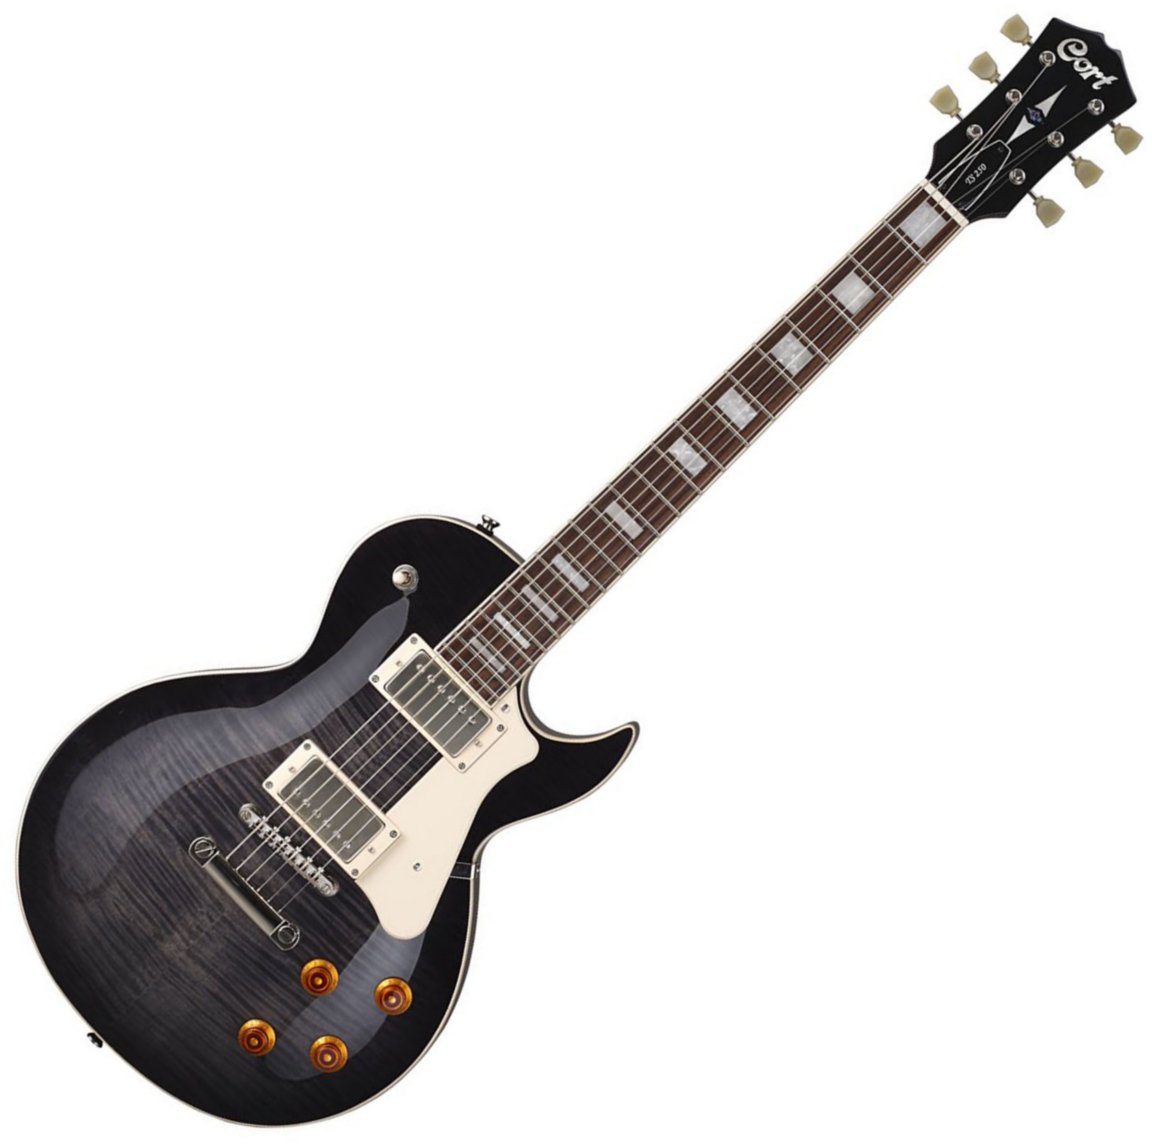 Elektrische gitaar Cort CR250 TBK (B-Stock) #951557 (Beschadigd)